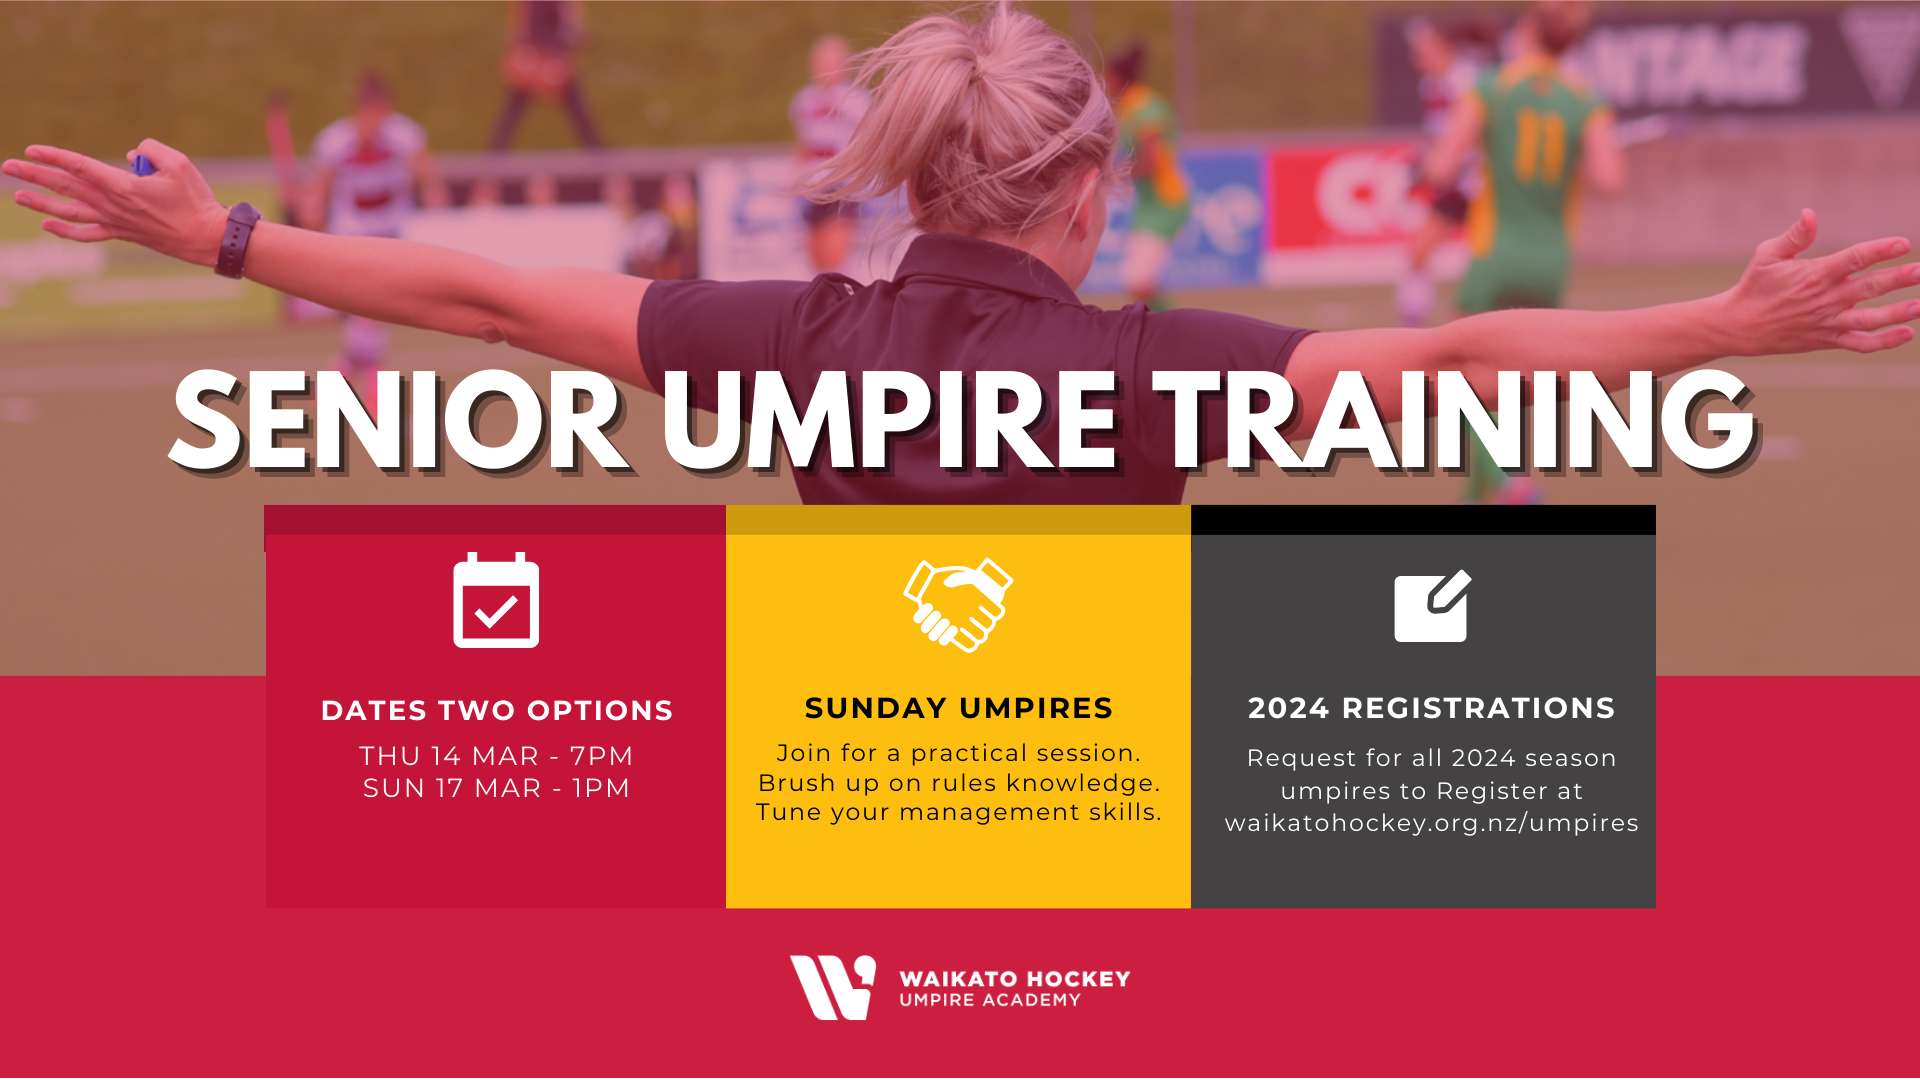 Upcoming Umpire Trainings